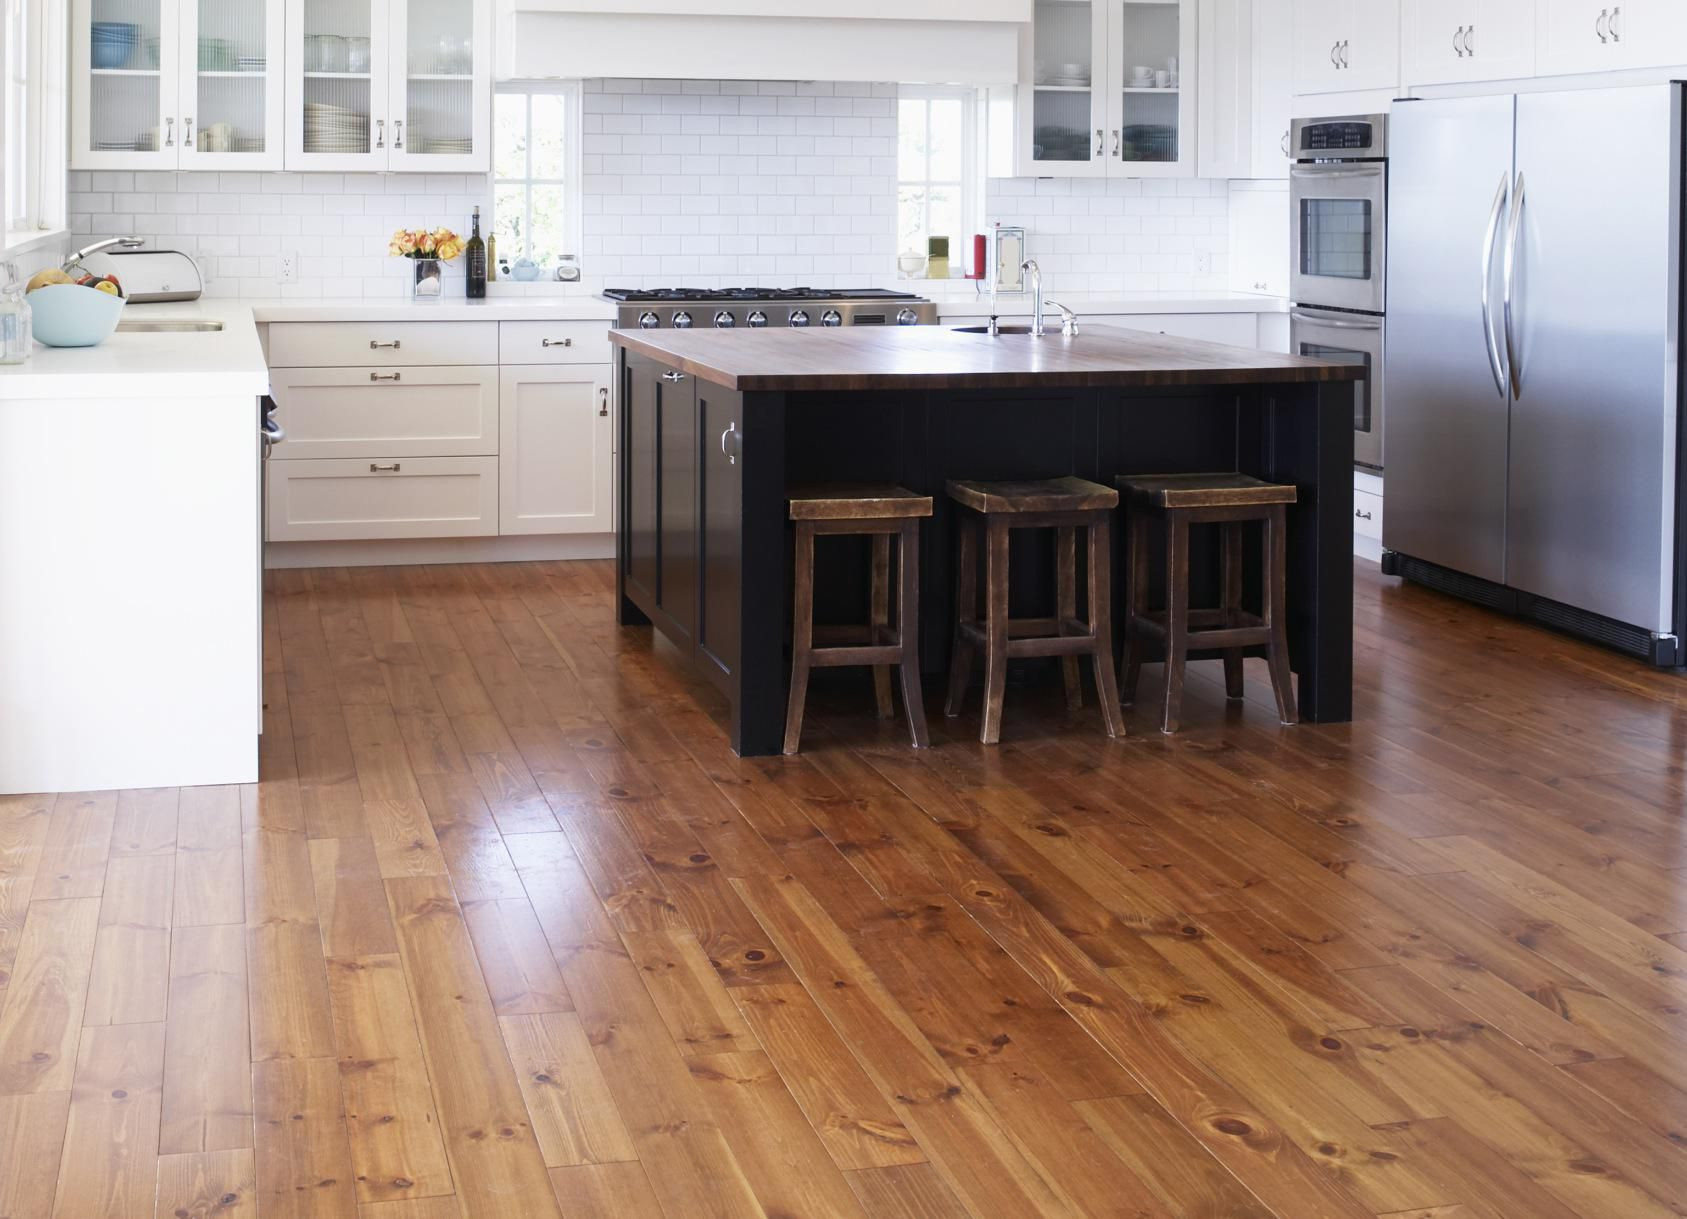 kitchen design with harddwood floors